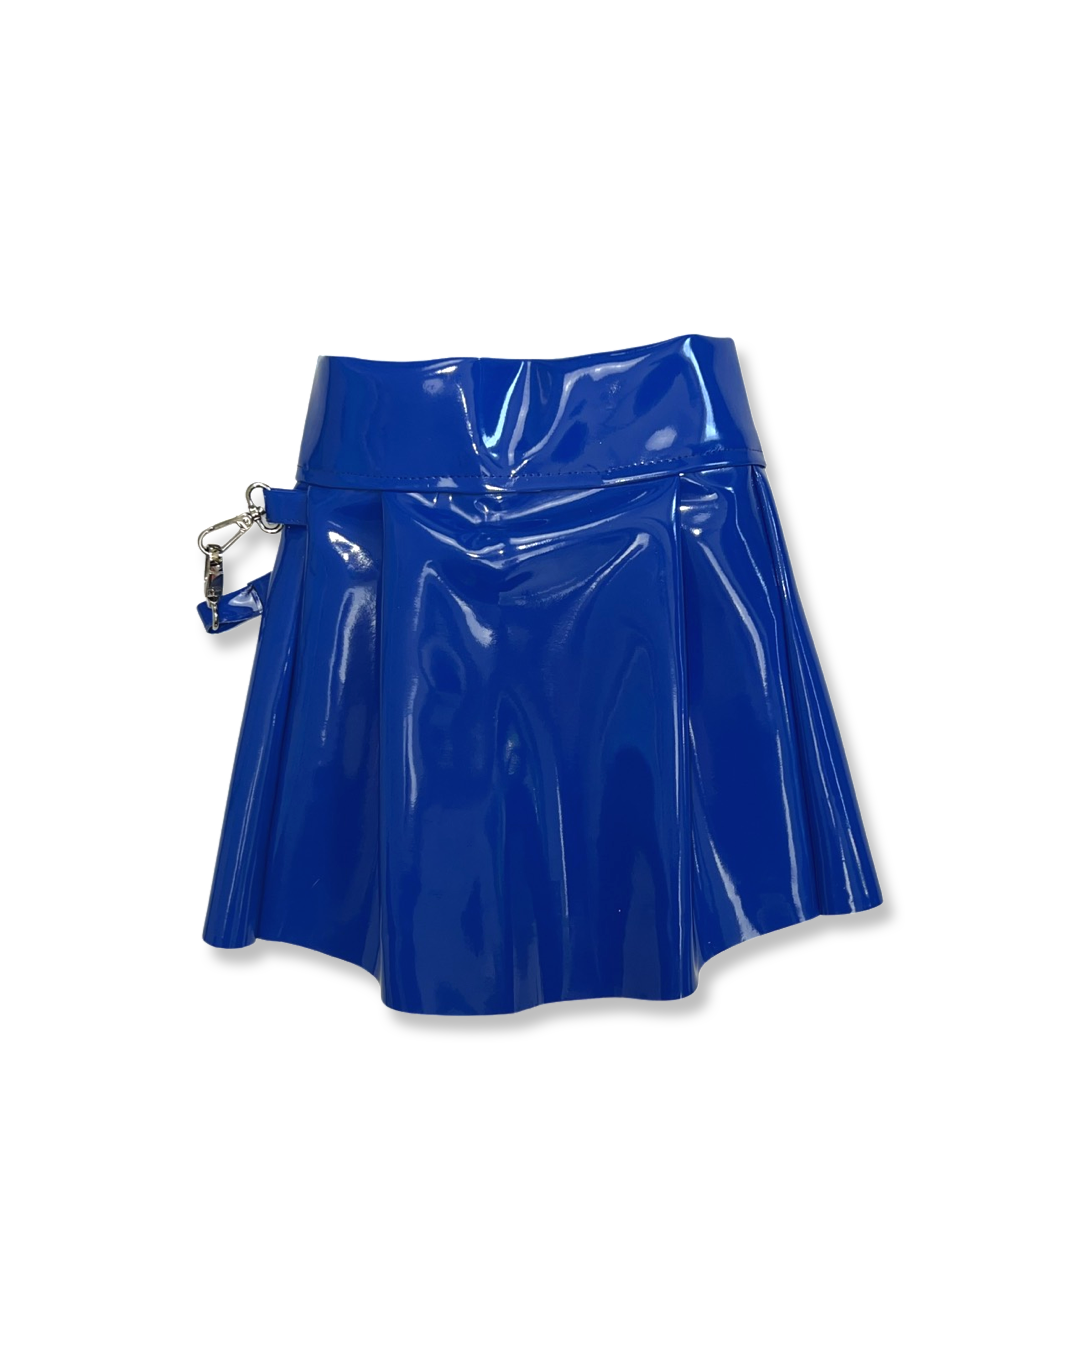 Uniform Cross Skirt in Bright Blue